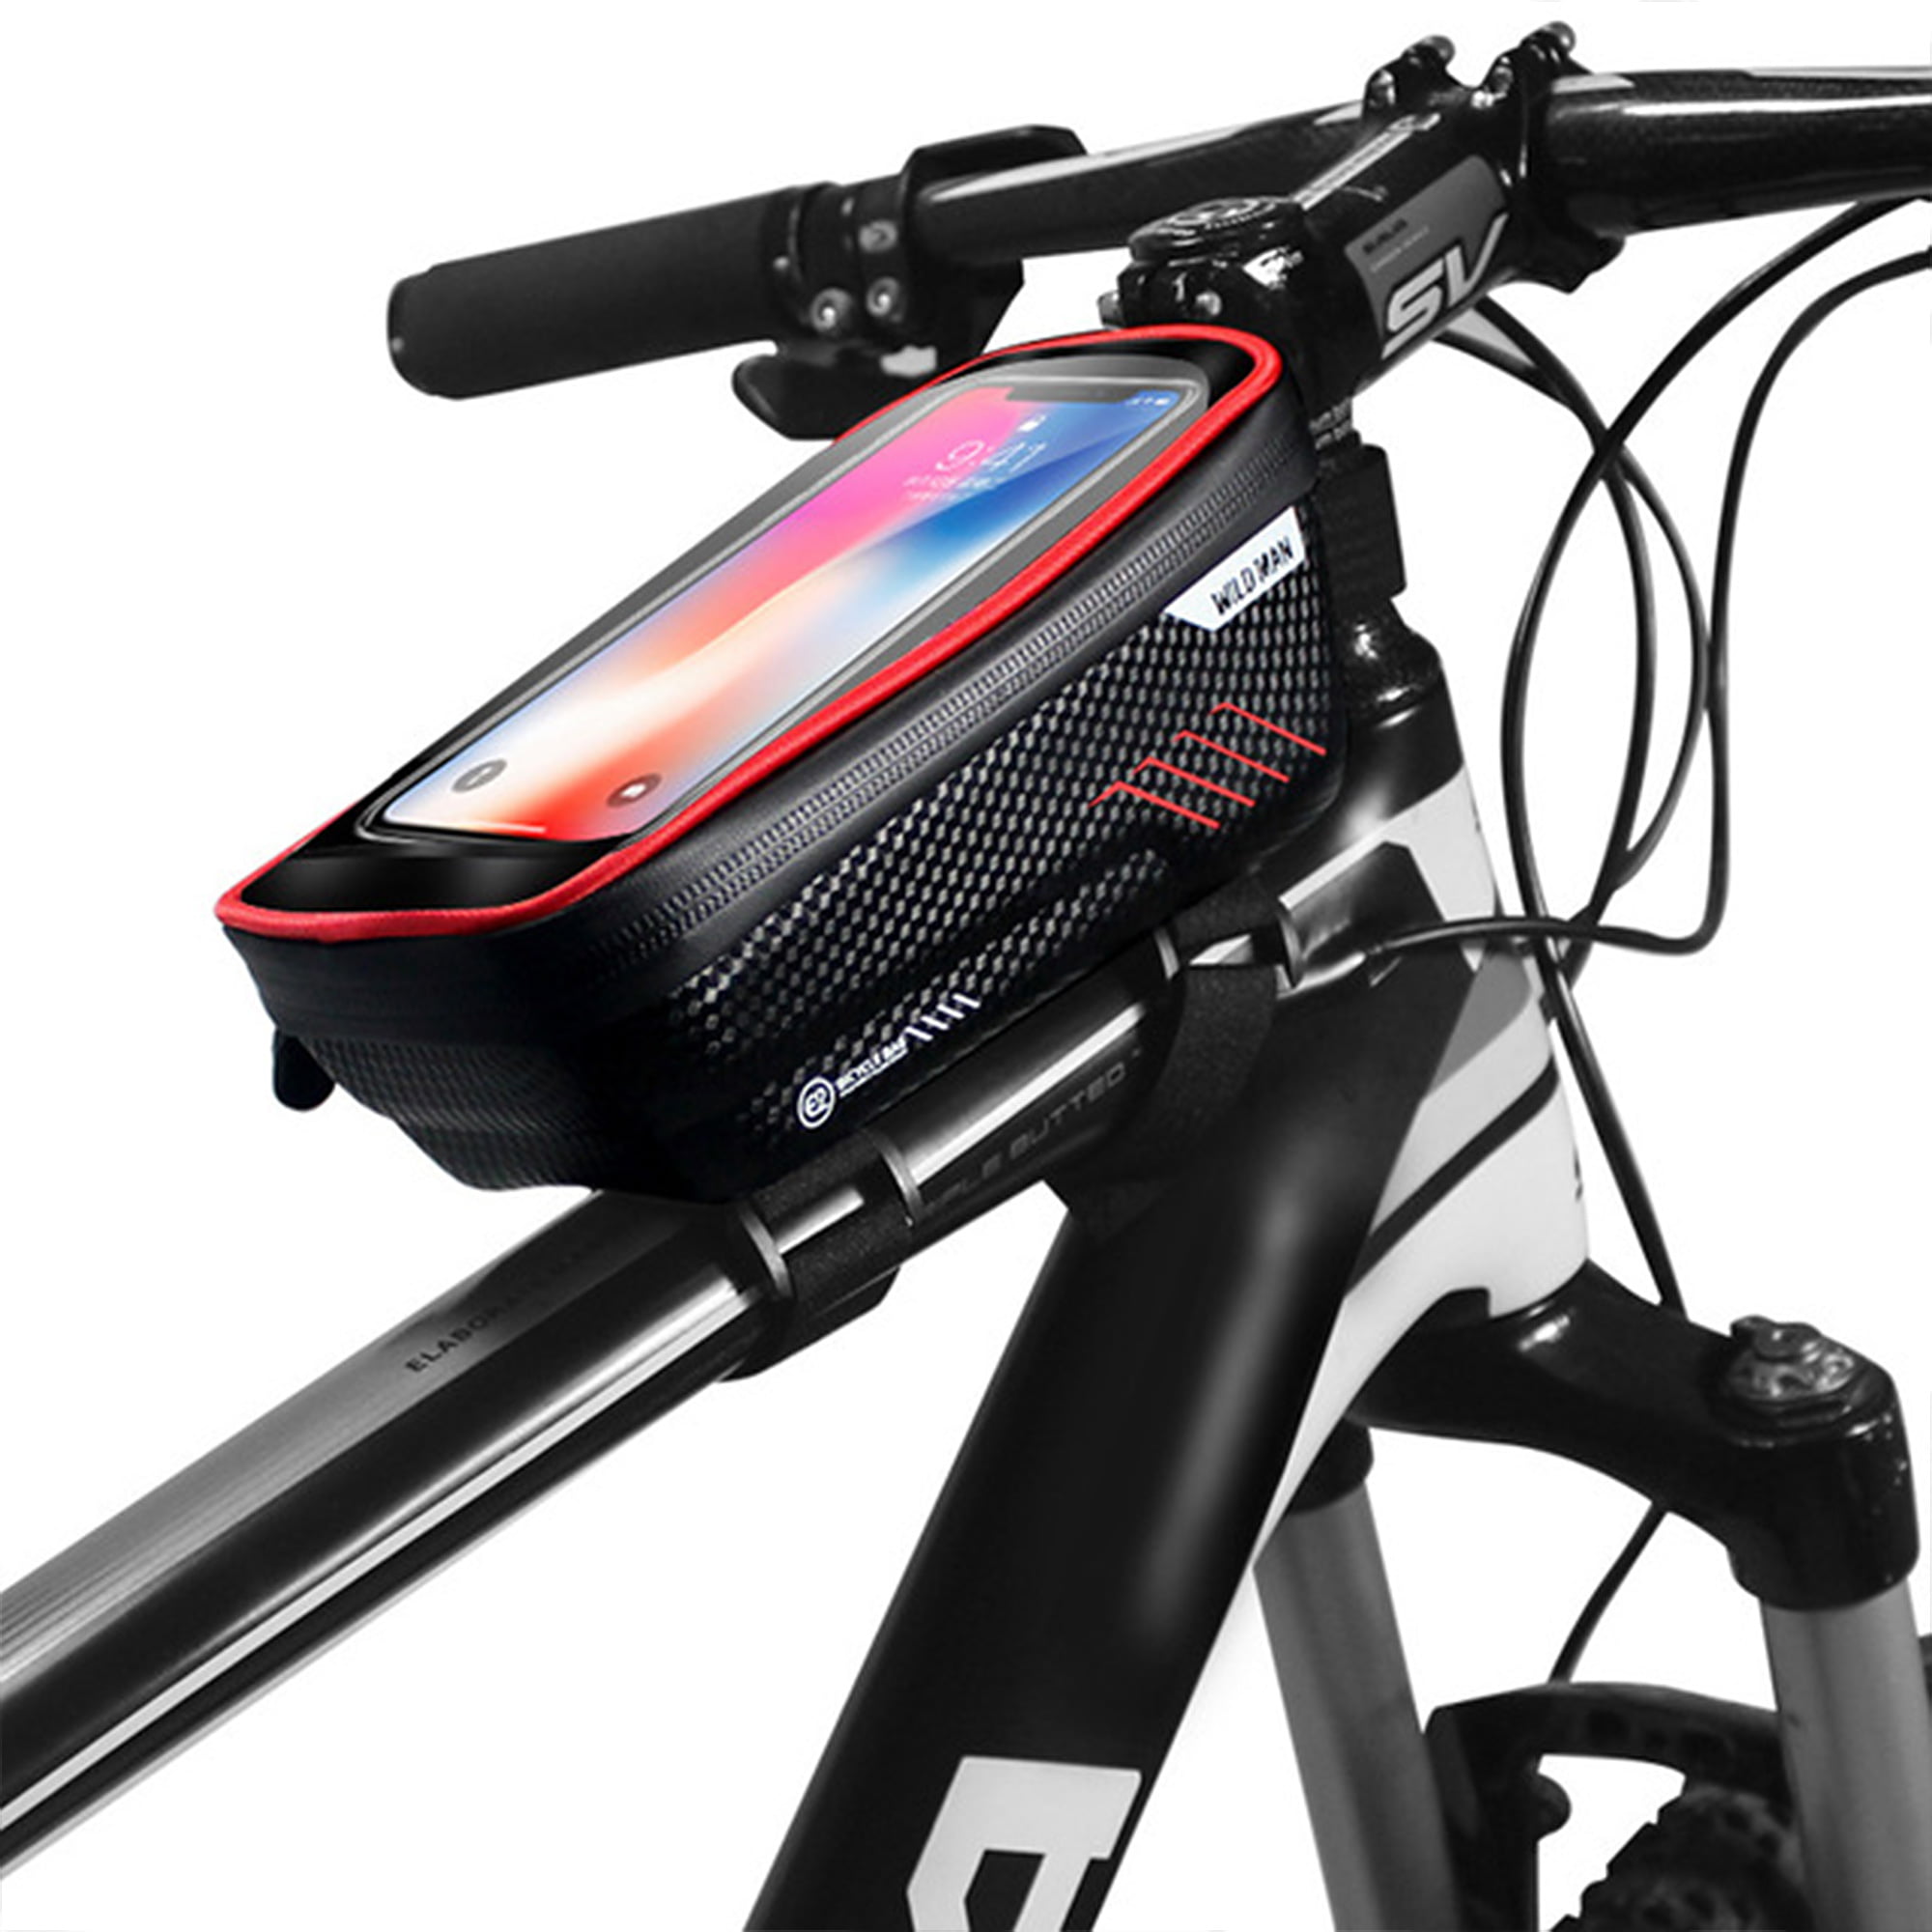 Huawei P30 6T S10 Plus/Huawei Mate 20 OnePlus 7 GPS Navigation Sunshade Waterproof Bike Phone Mount Bag Bicycle Frame Bike Handlebar Case for iPhone Xs Max/iPhone XR/Samsung Galaxy S10